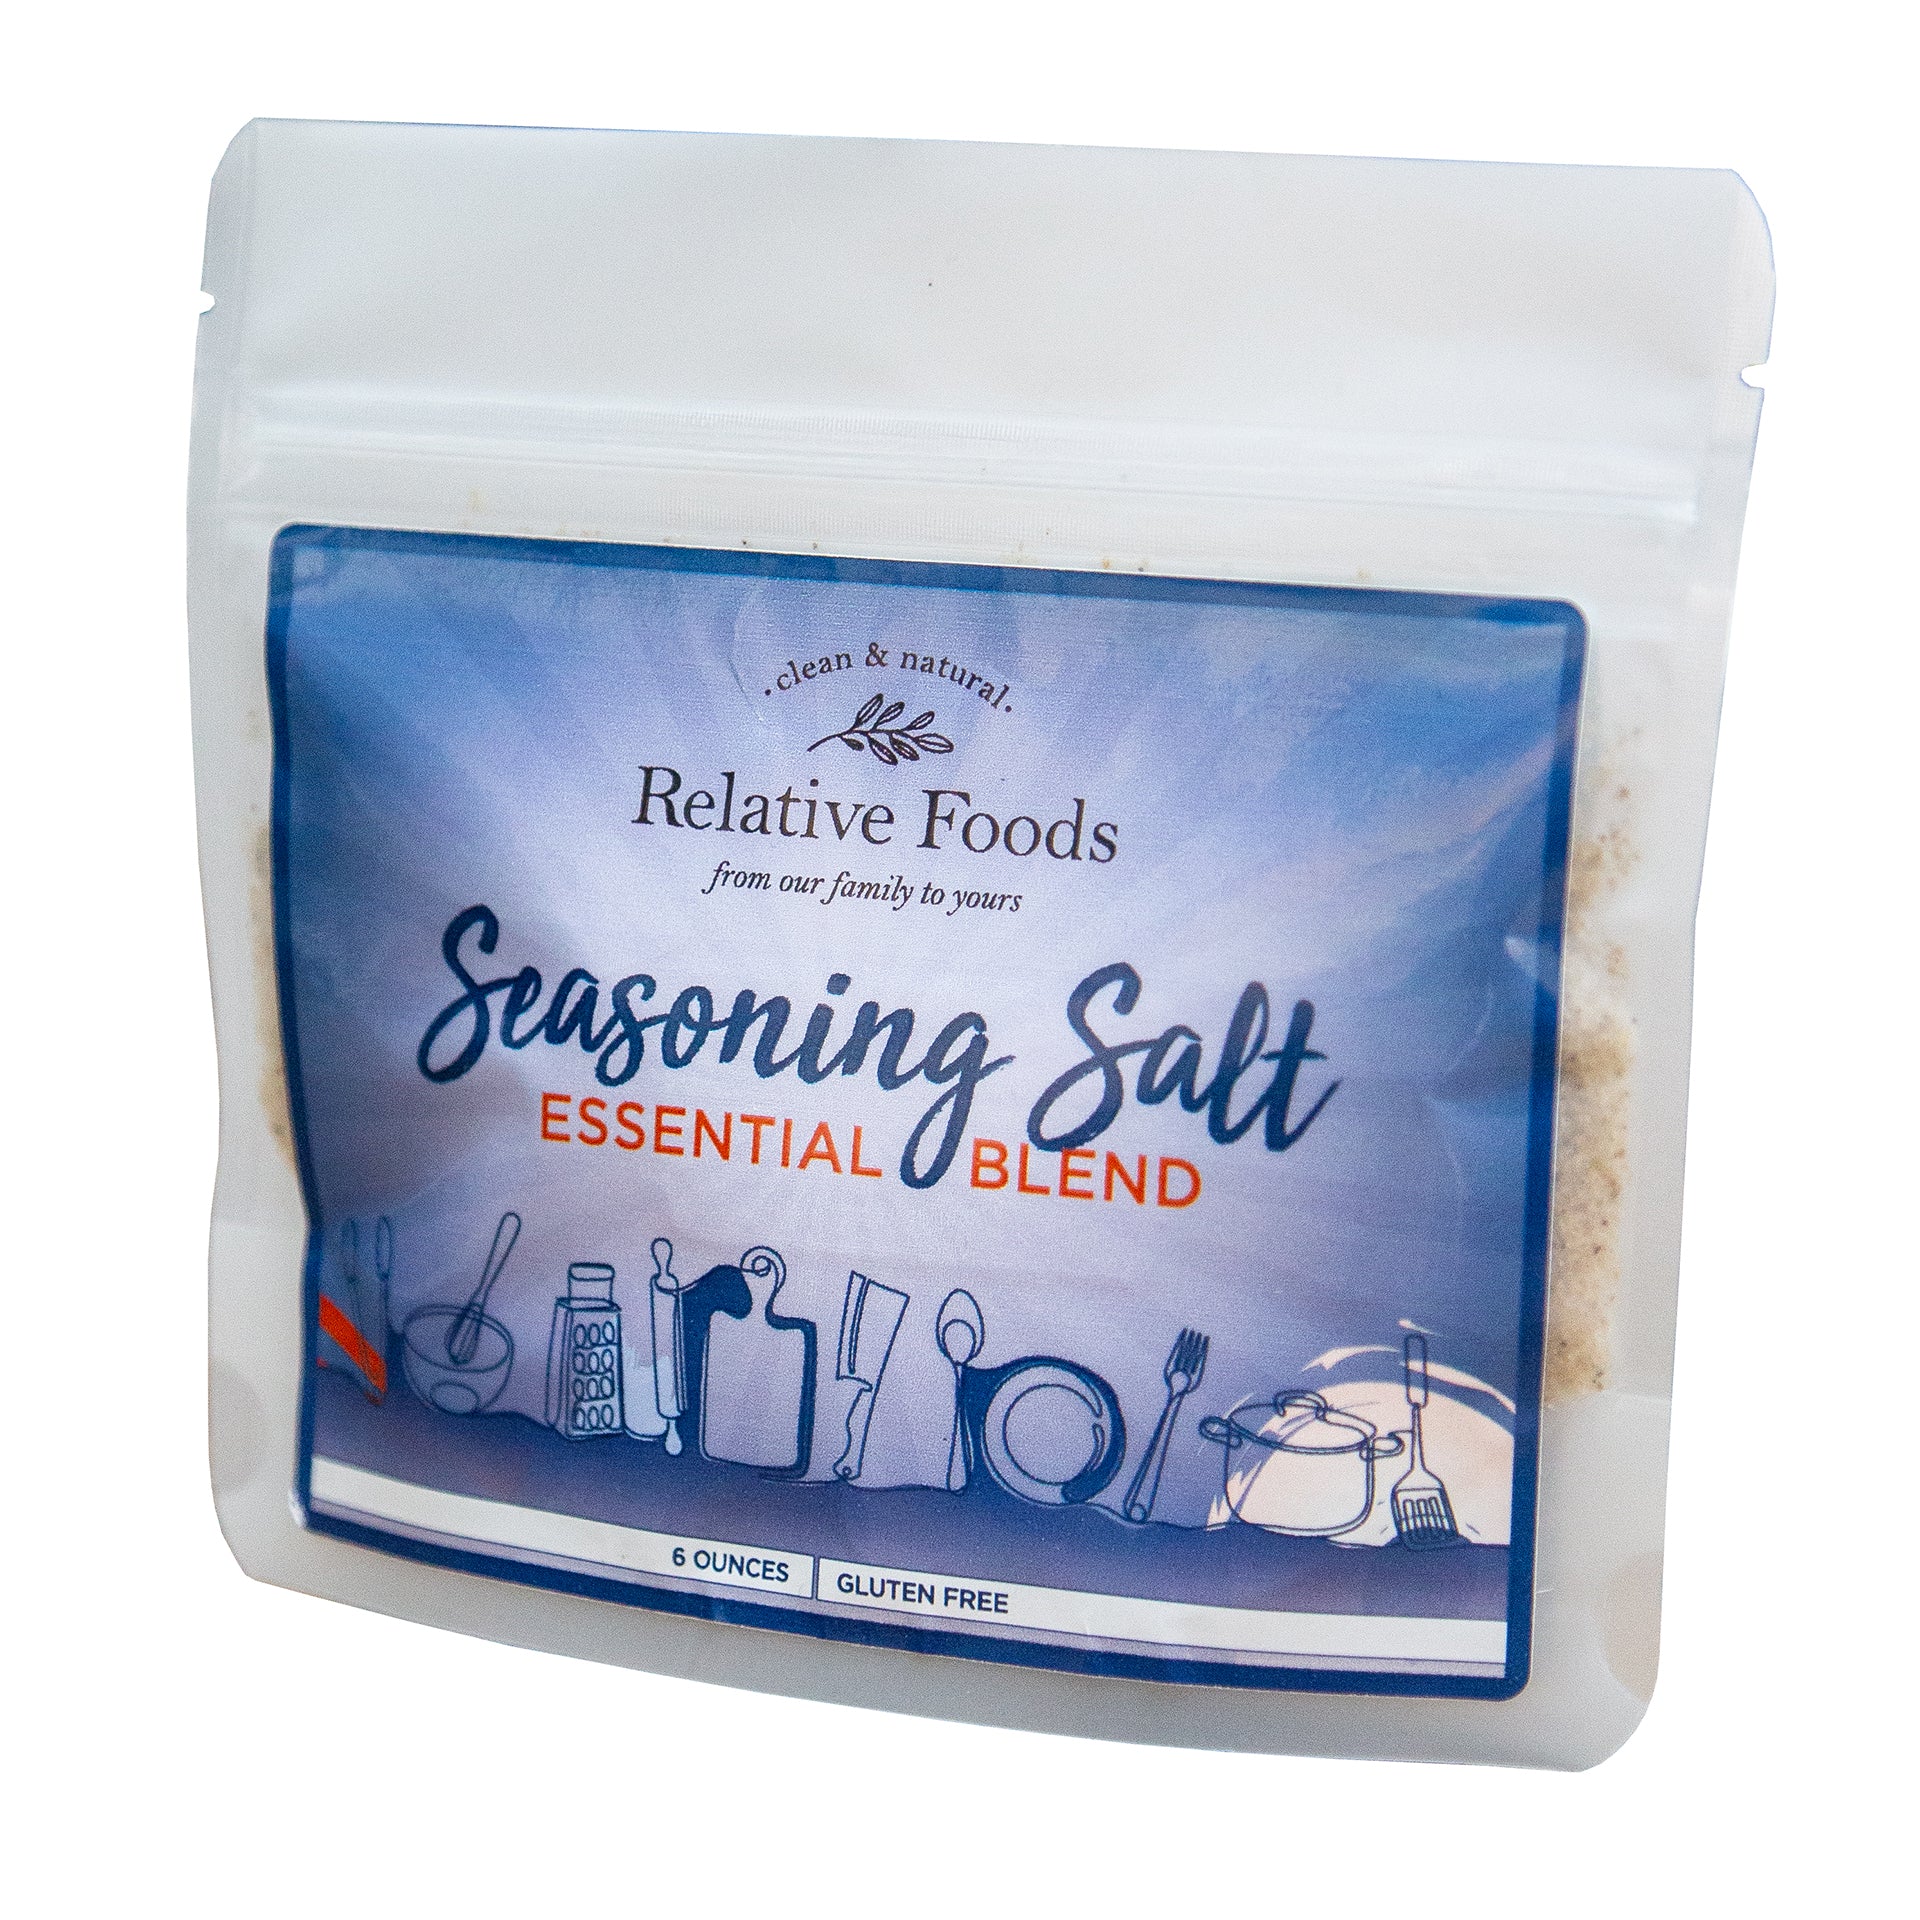 Seasoning Salt - The Essential Blend